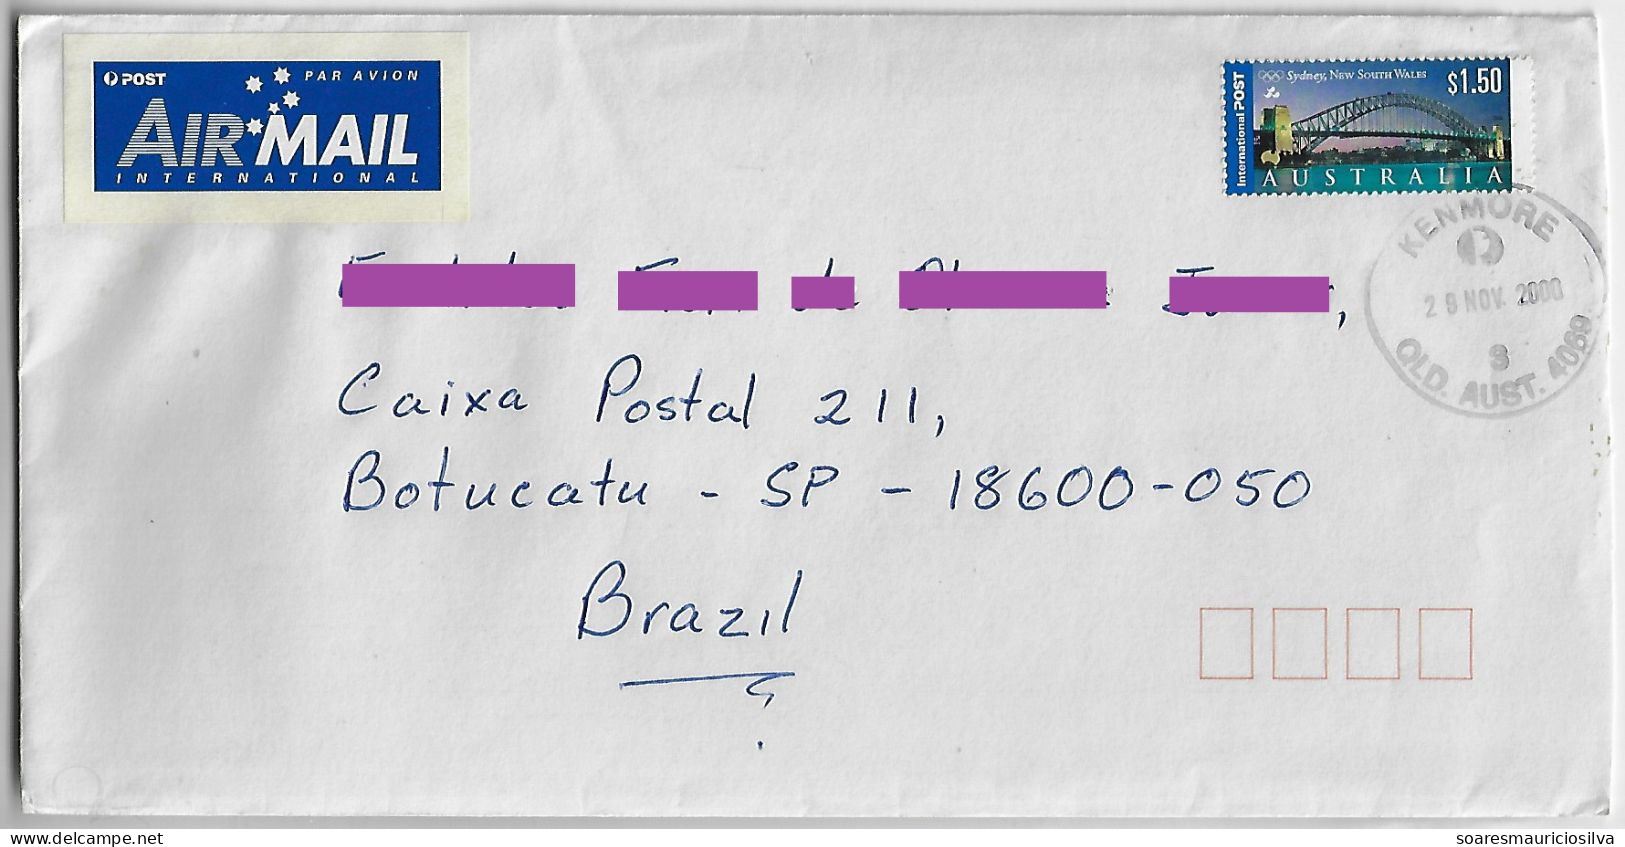 Australia 2000 Airmail Cover Sent From Brisbane Agency Kenmore To Botucatu Brazil Stamp Sydney Olympics Harbor Bridge - Covers & Documents